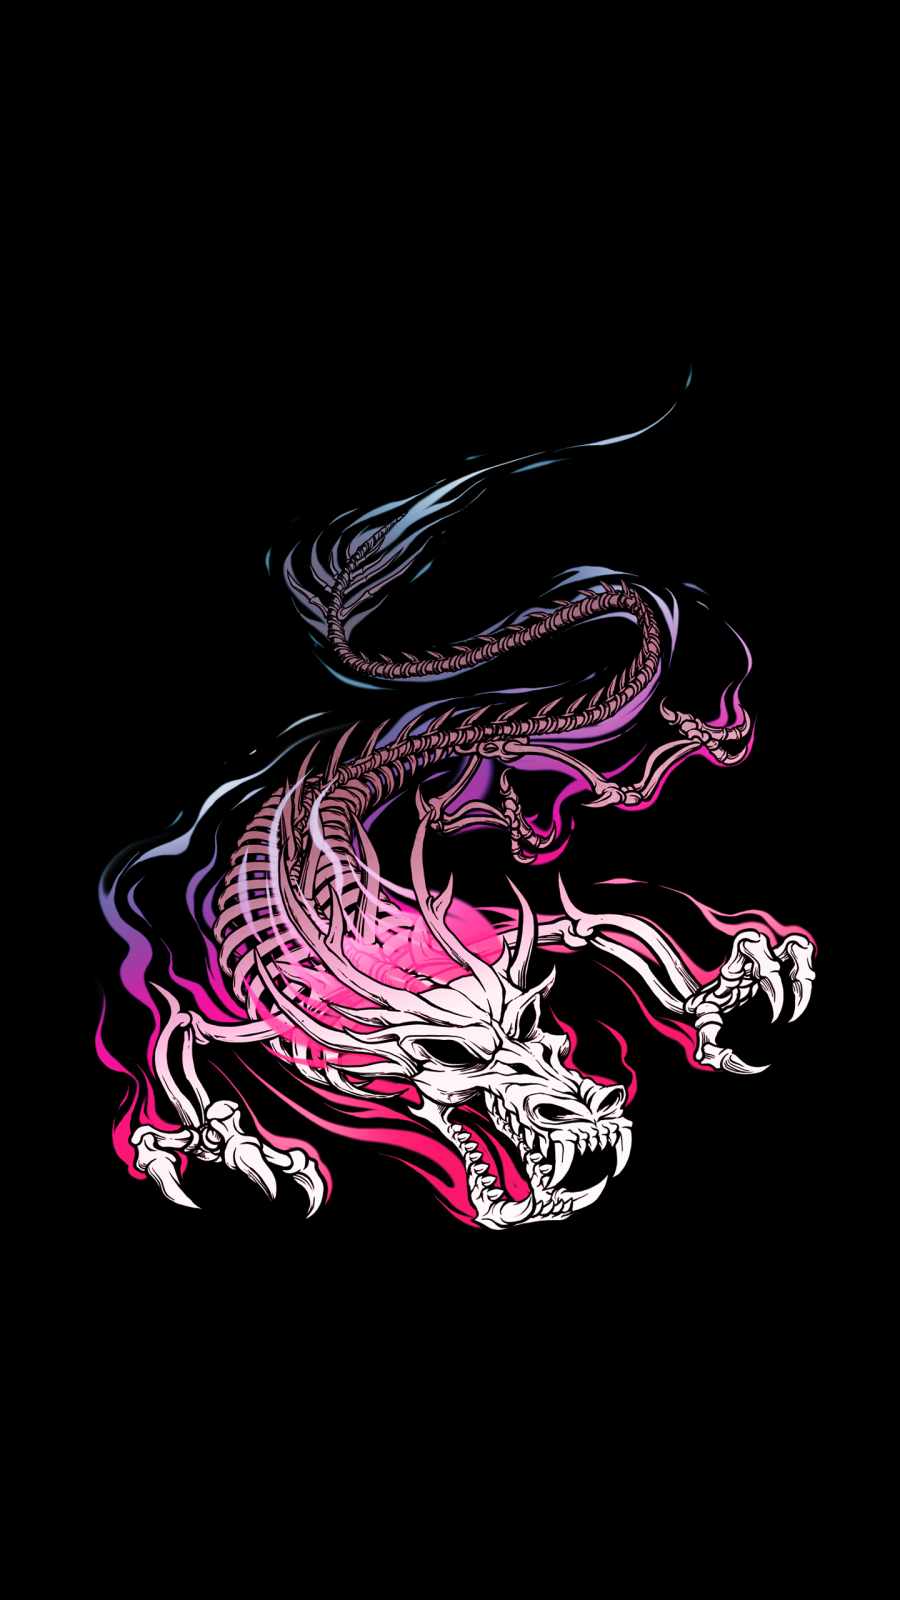 Chinese Skull Dragon iPhone Wallpaper